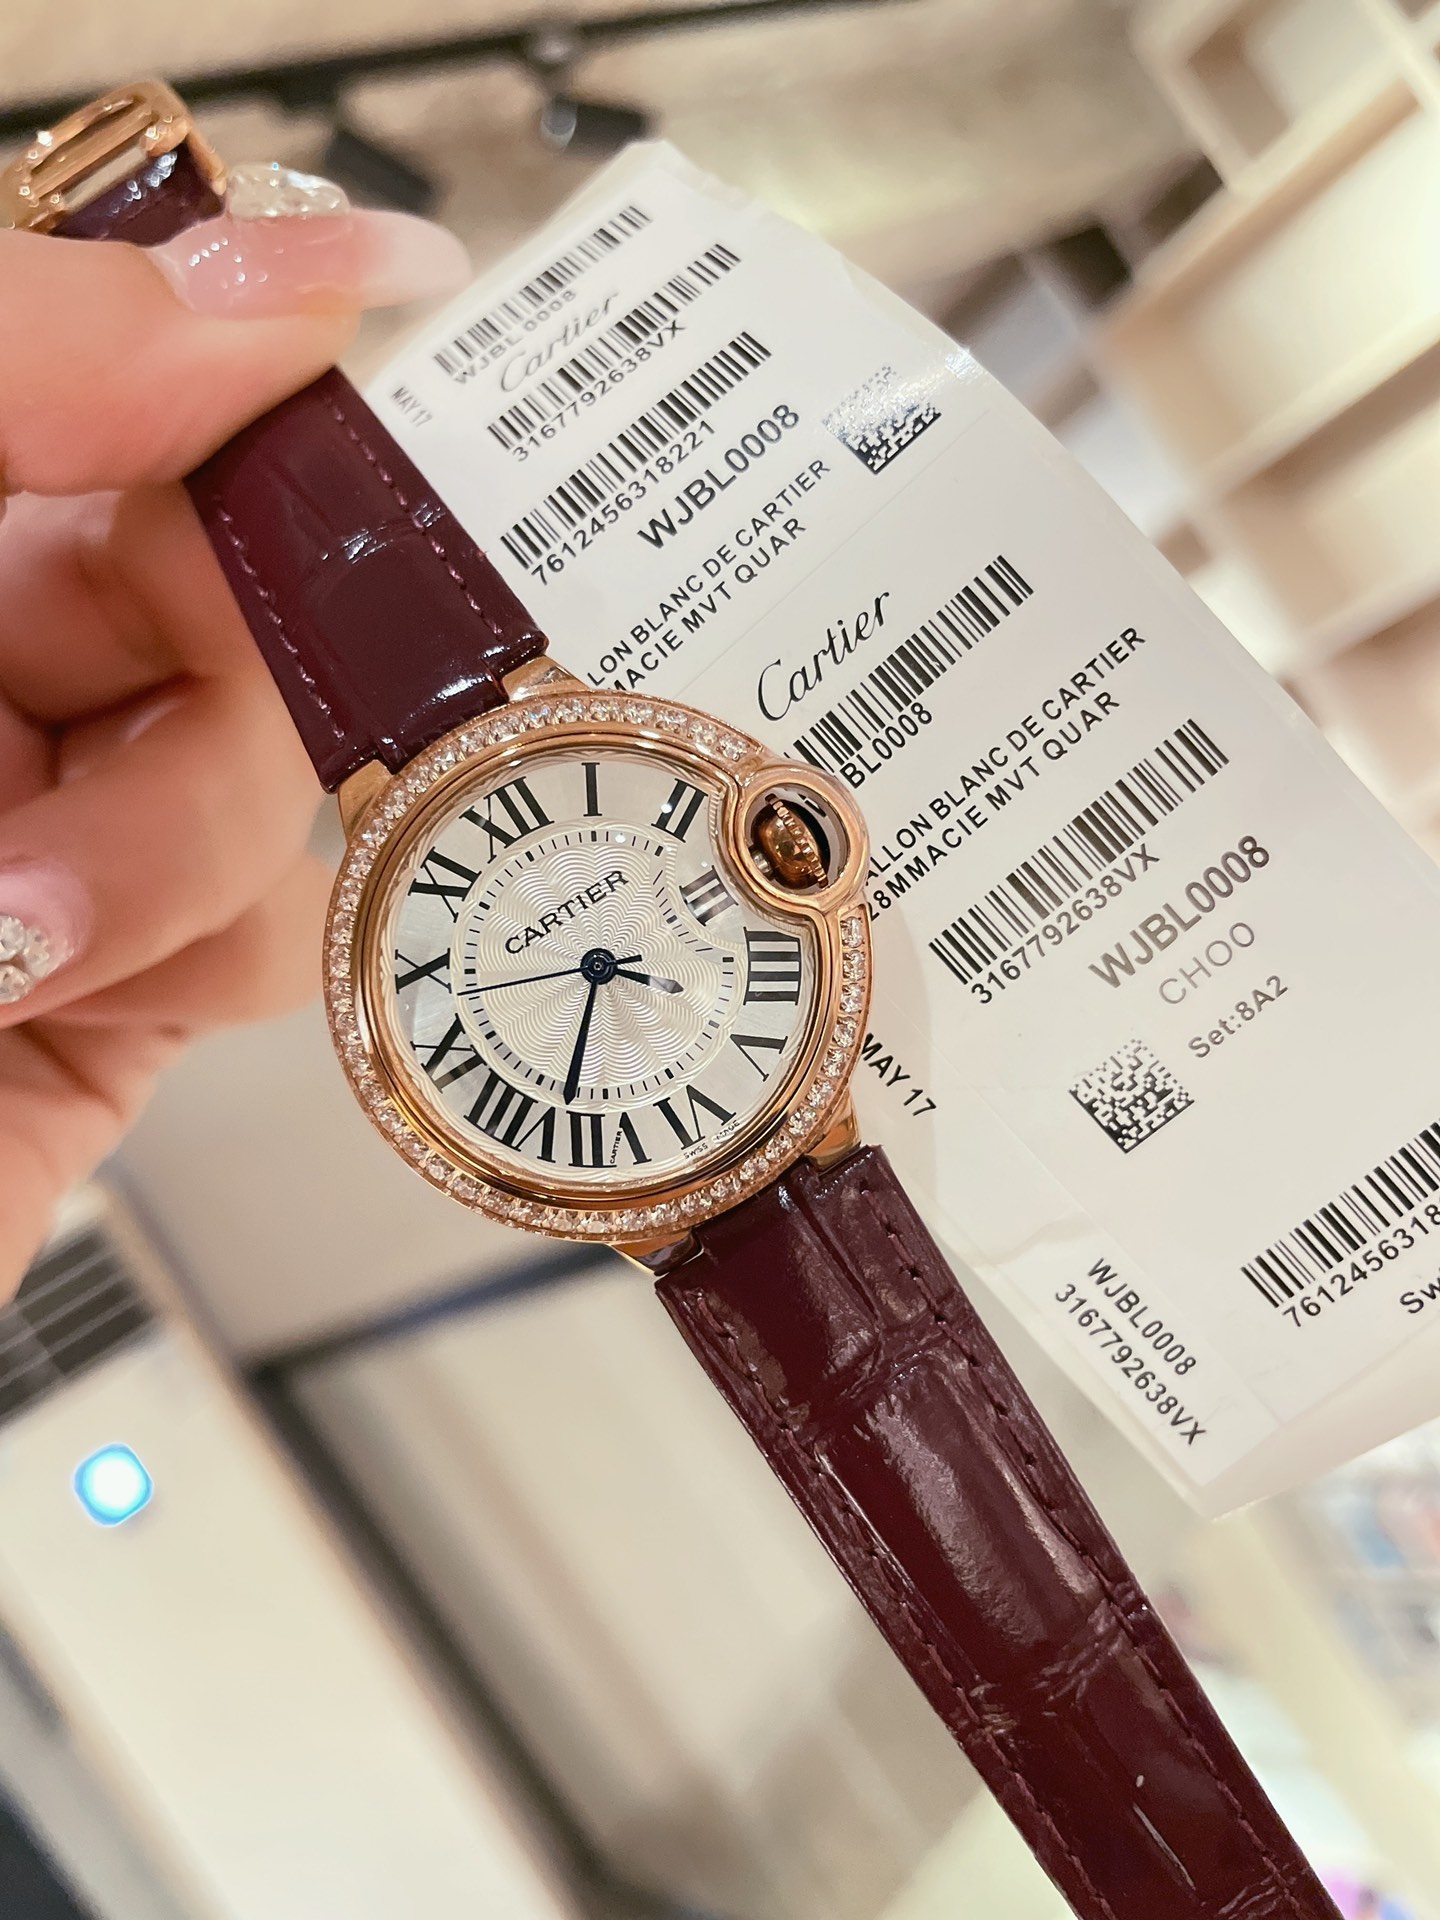 CARTIERカルティエ マレーシアｎ級品 フランス 薄い腕時計 丸い形 レザー 新商品 限定品 レッド_1